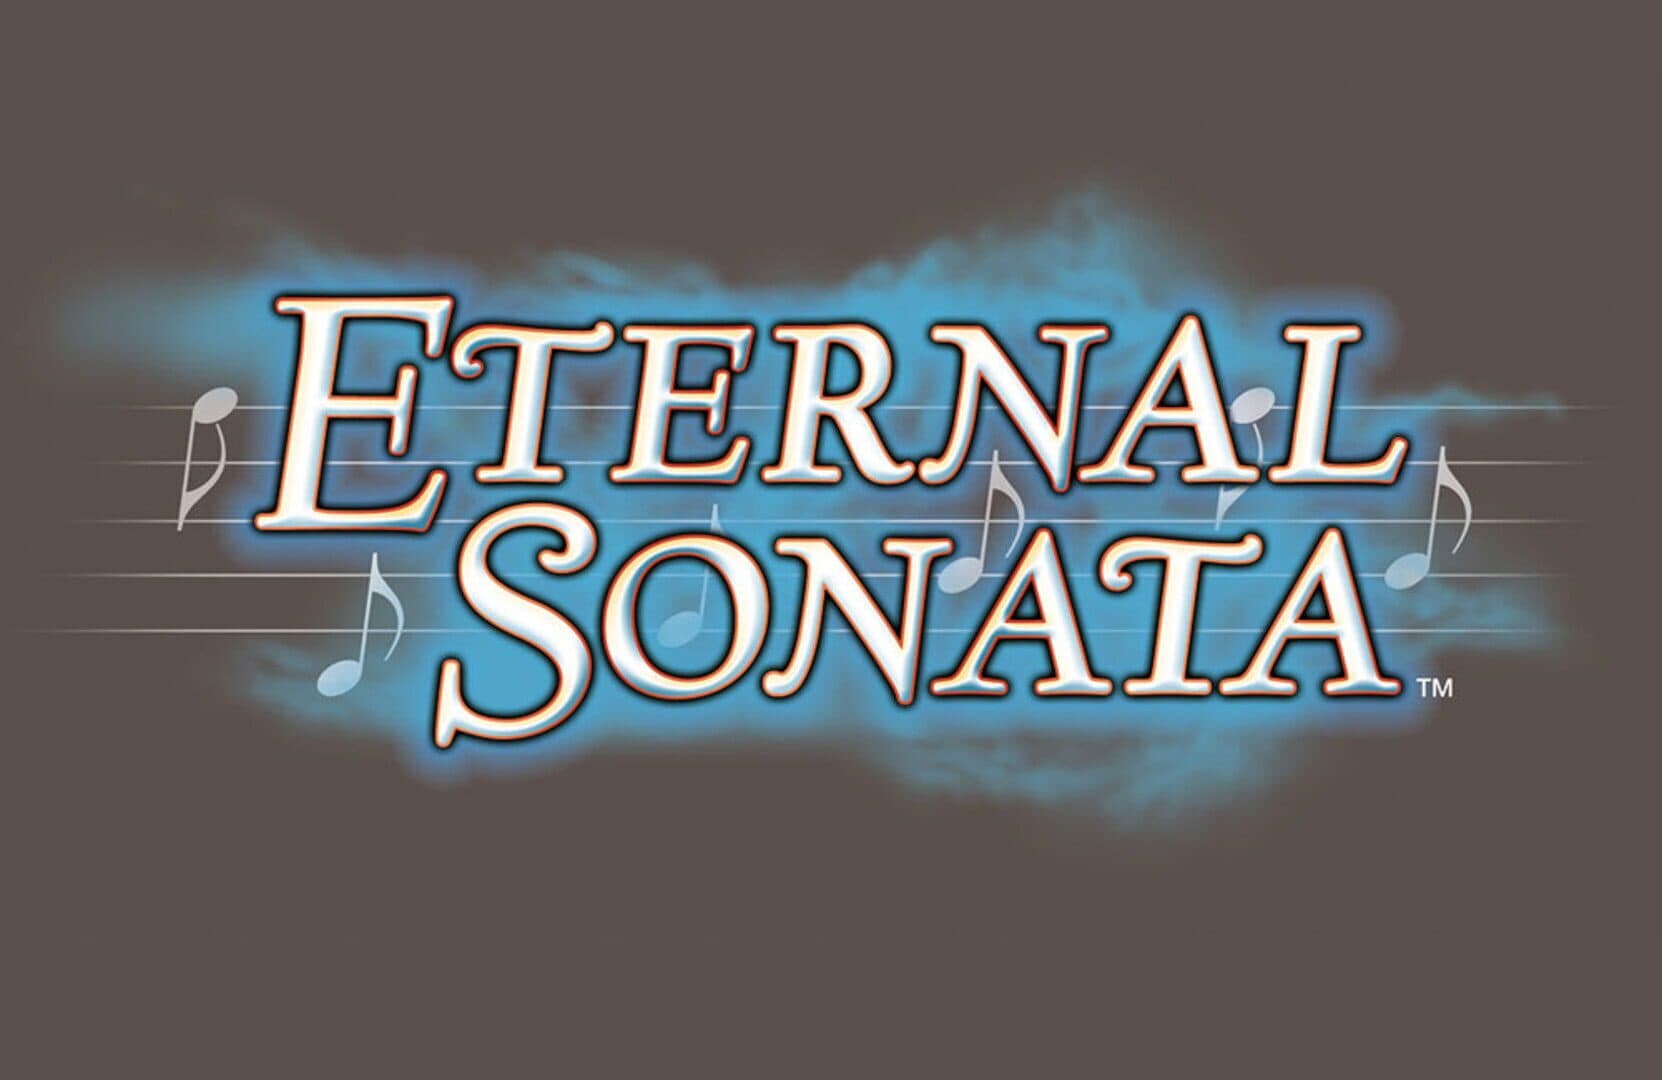 Eternal Sonata Image